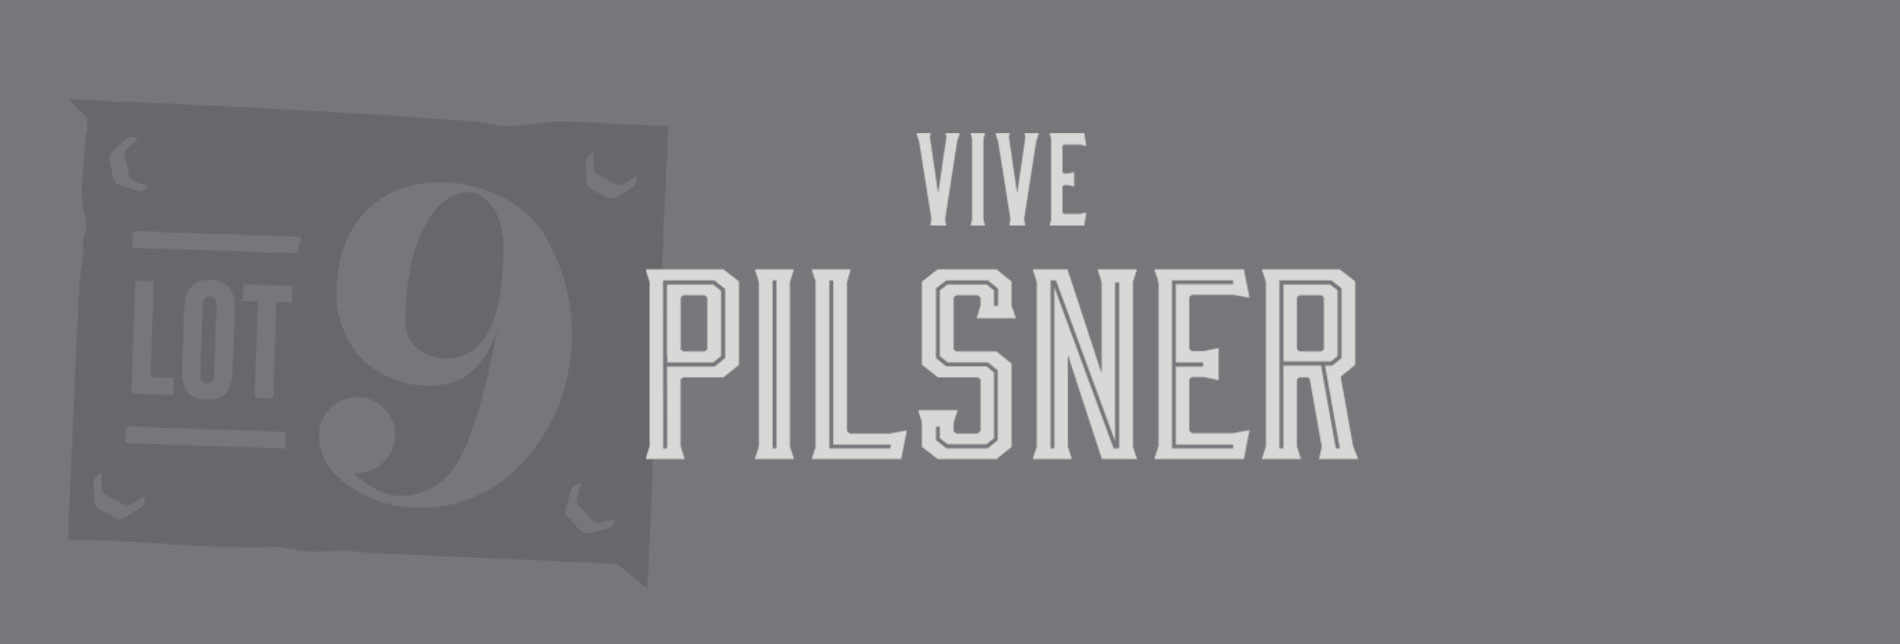 Crisp Pilsner logo